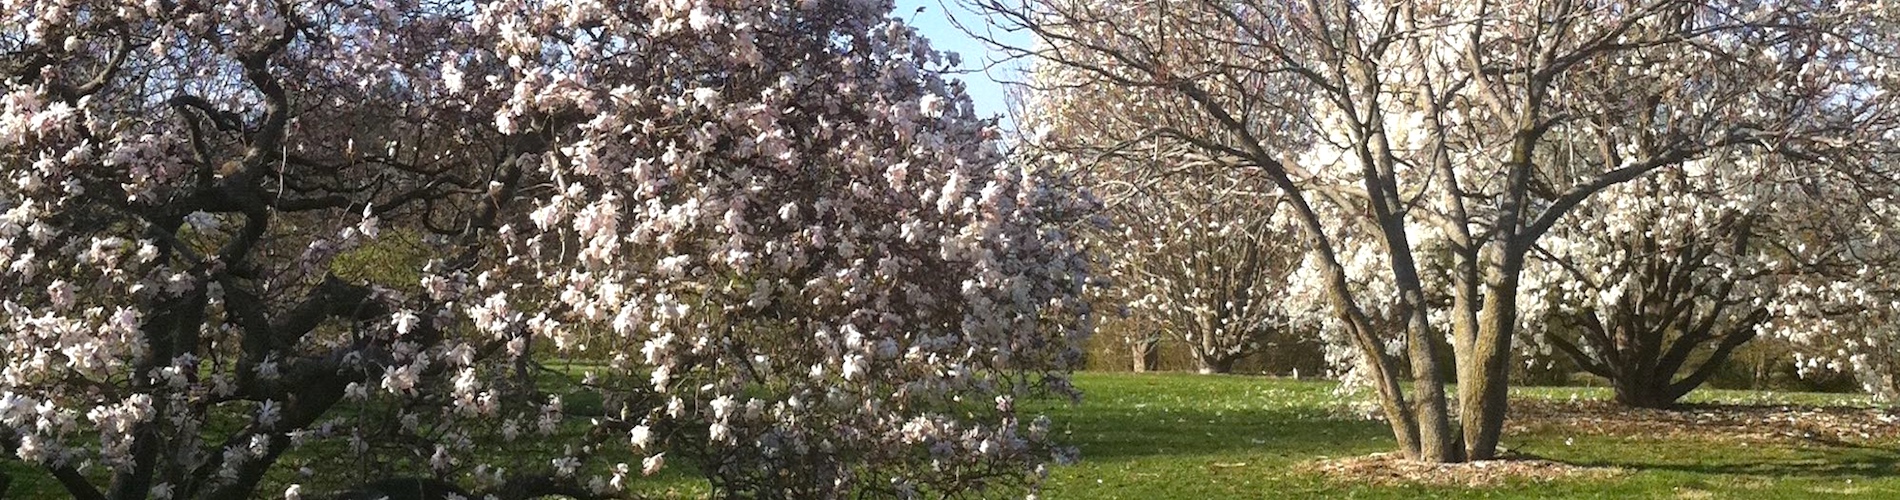 Longenecker Gardens at the University of Wisconsin Arboretum on March 20, 2012.